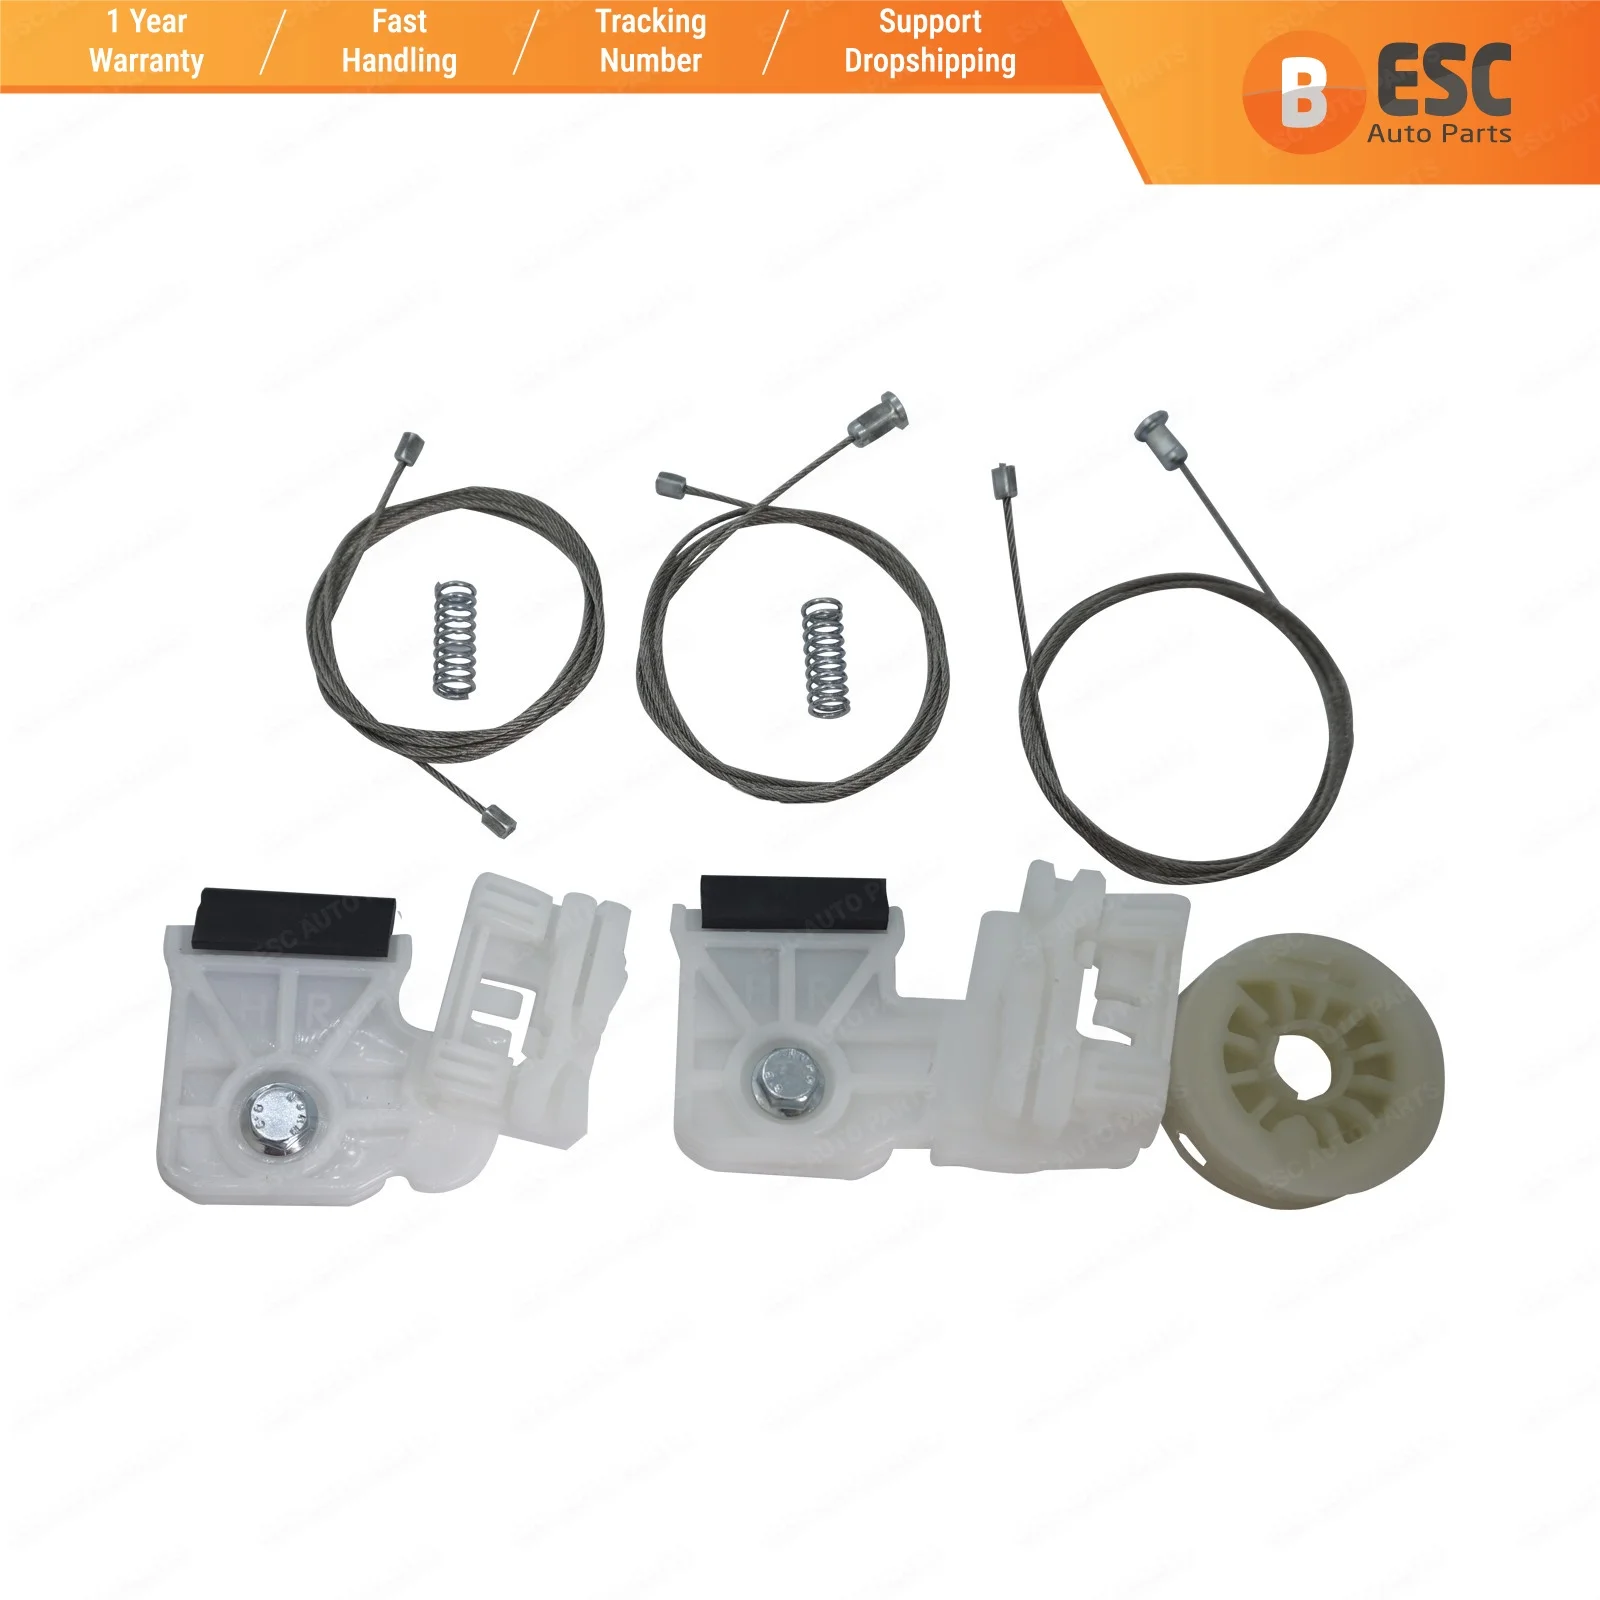 ESC Auto Parts EWR5218 Power Electric Window Regulator Repair Kit Front Right Door for Hyundai Elantra MK4 Sonata MK5